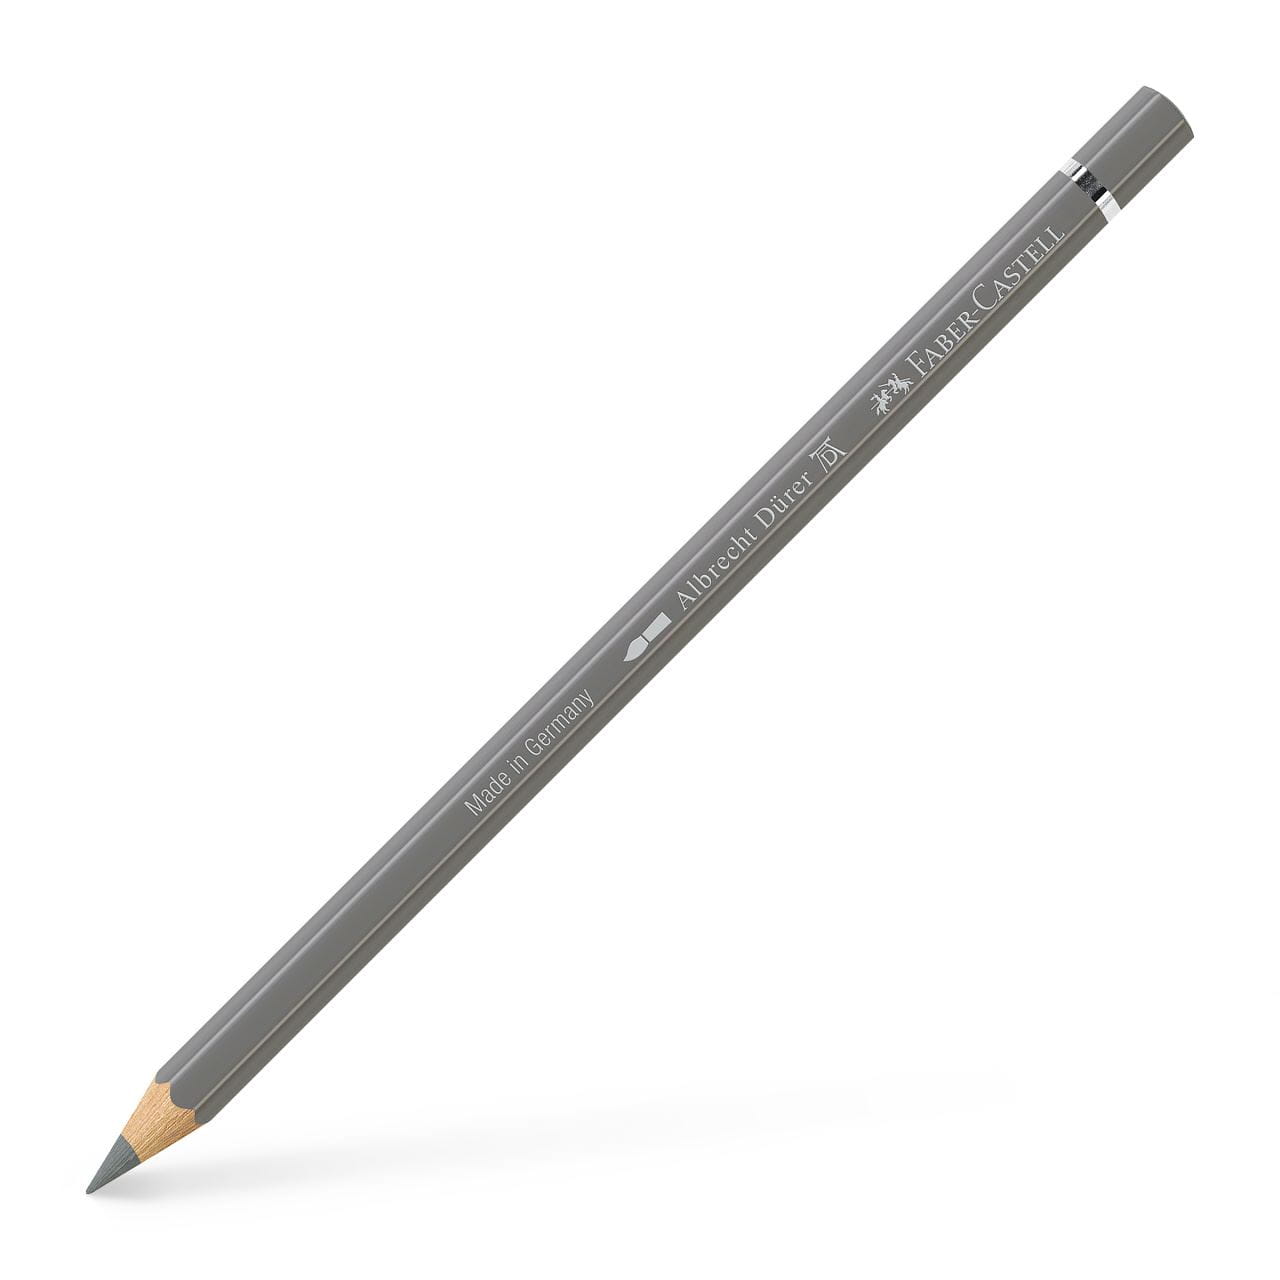 Faber-Castell - アルブレヒト・デューラー水彩色鉛筆・単色（ウォームグレーⅣ）